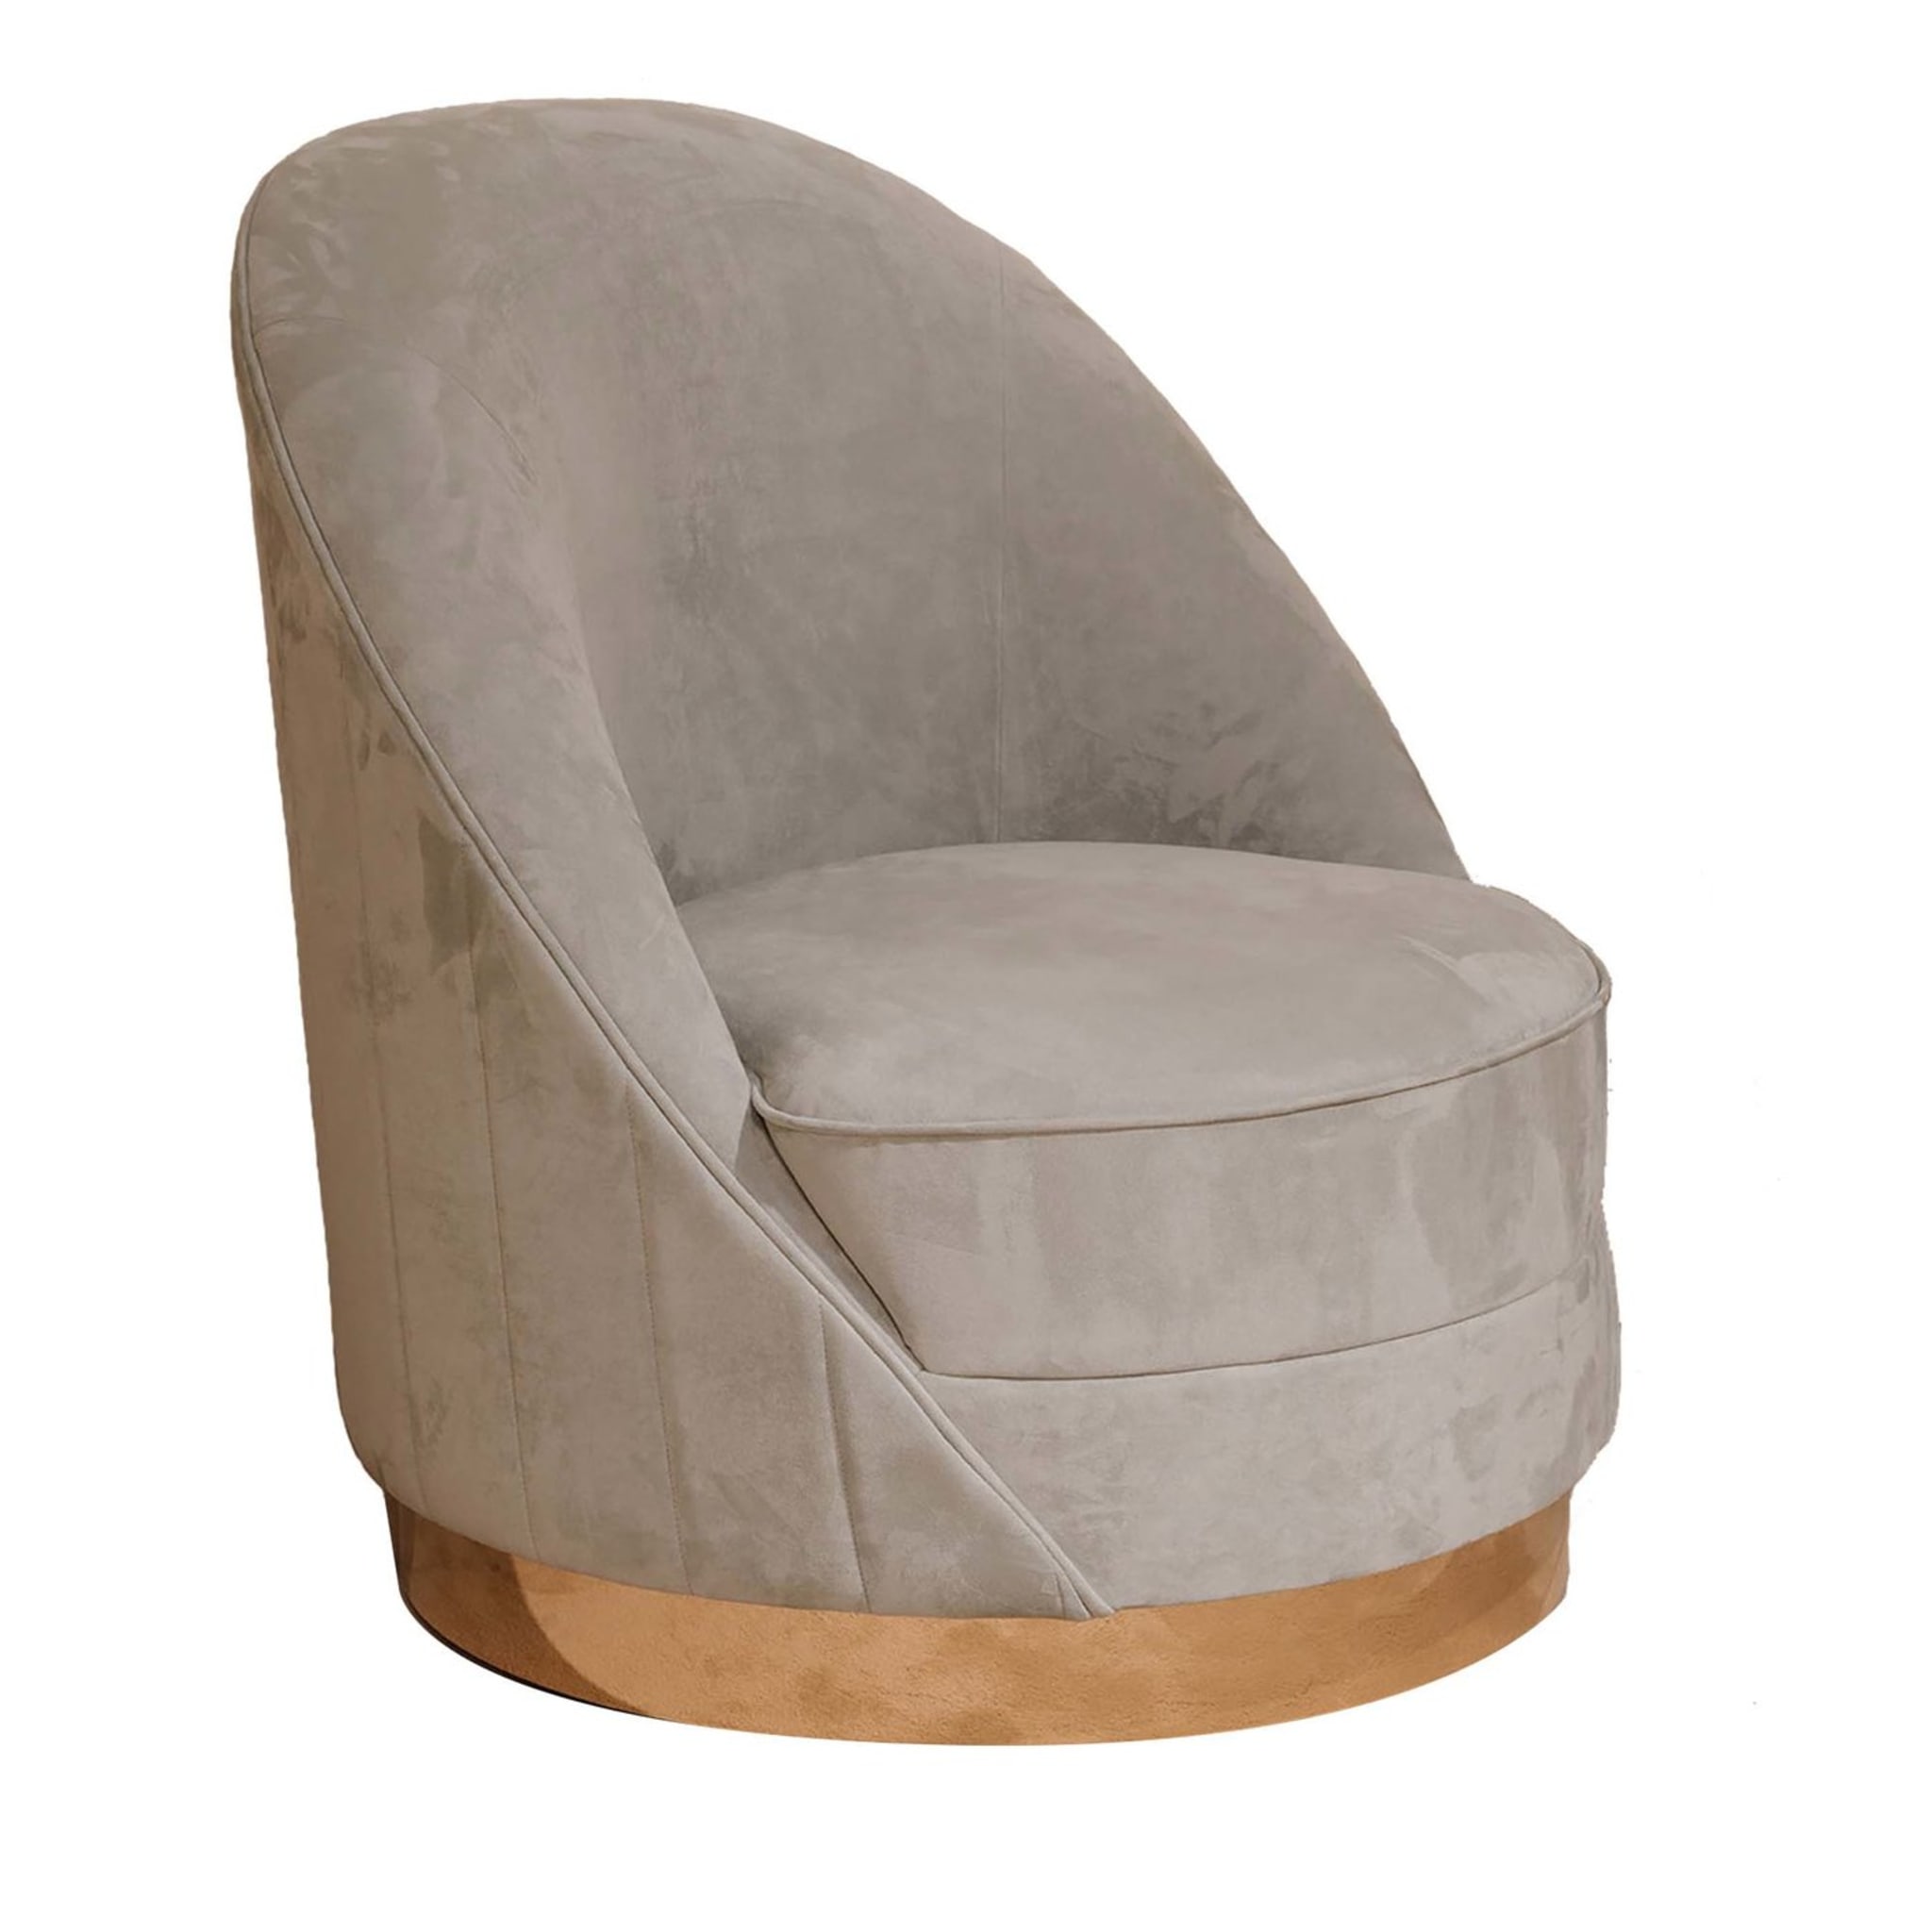 Capsule gray armchair by Pino Vismara - Main view